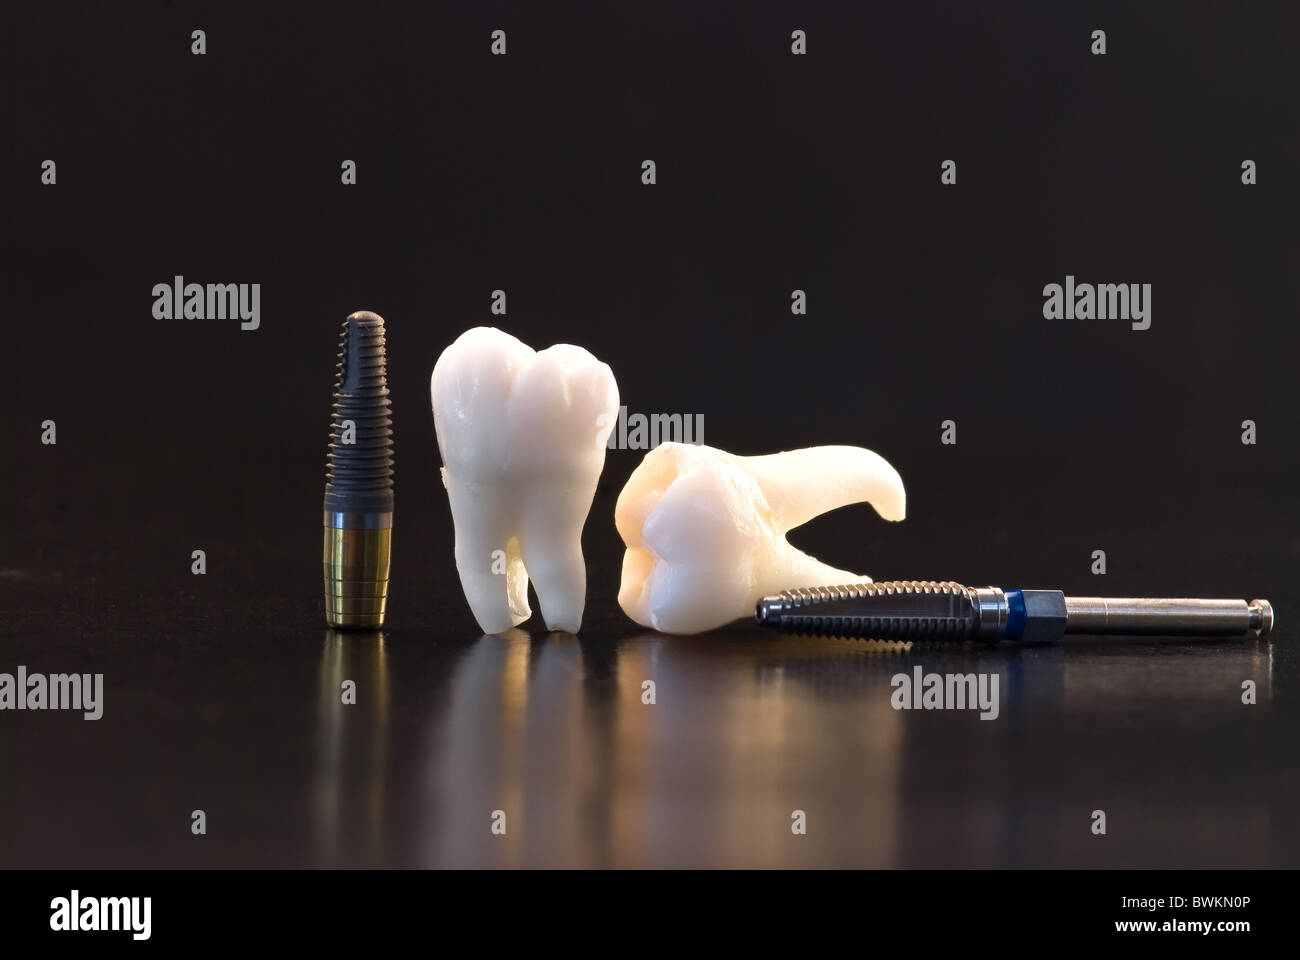 Real Human Wisdom teeth and Dental implants Stock Photo